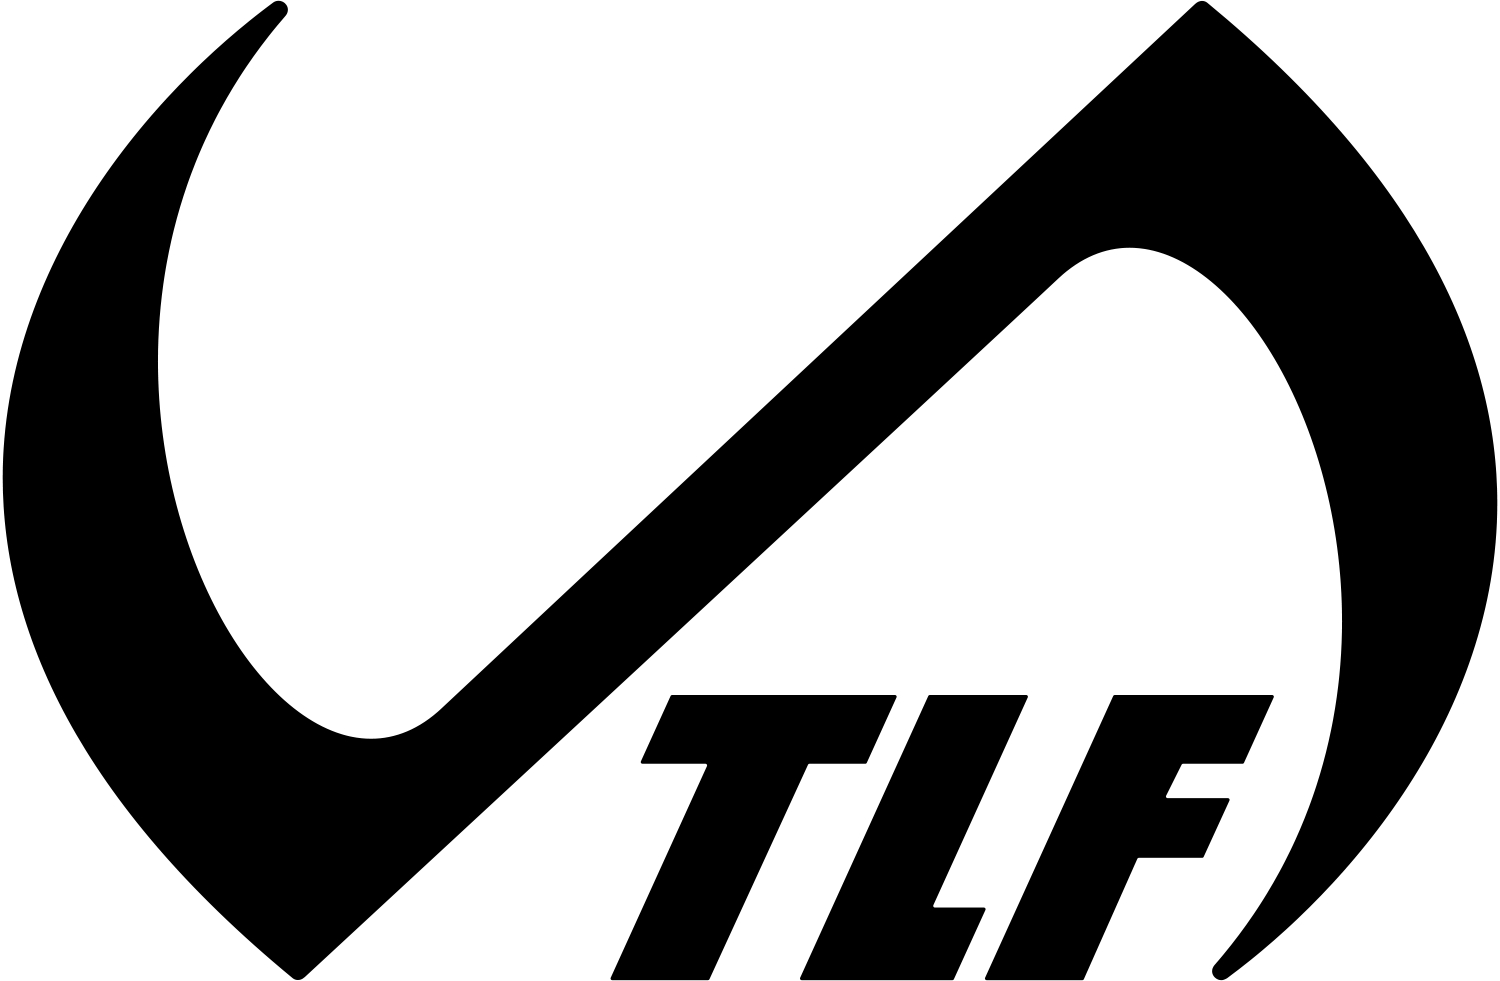 File:TLF Apparel logo.png - Wikipedia